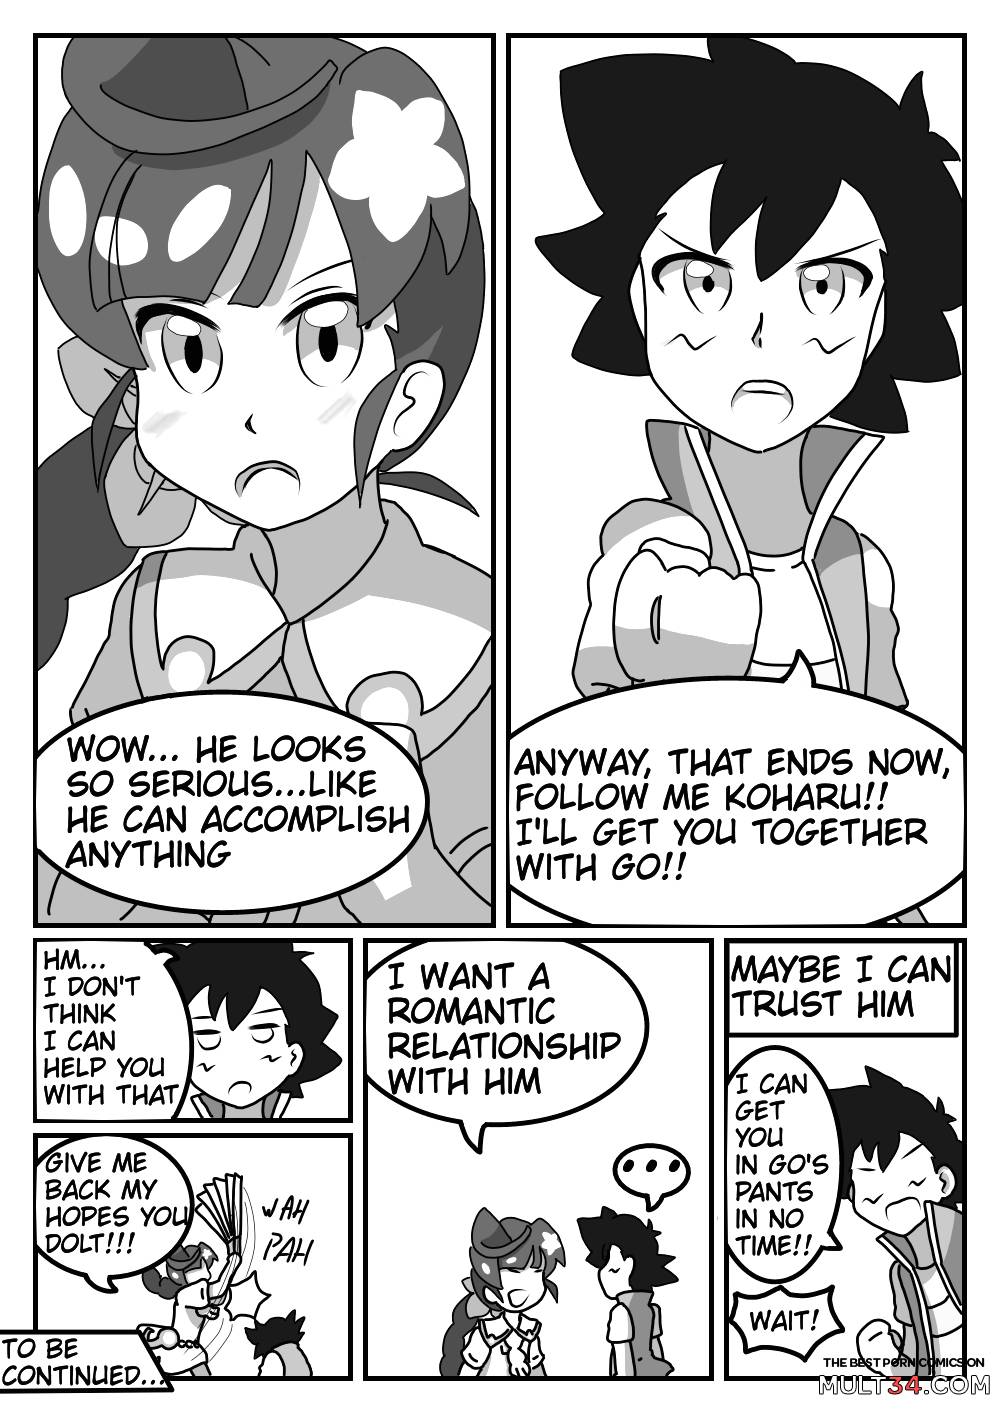 Satoshi and Koharu's Daily talk 4 page 15